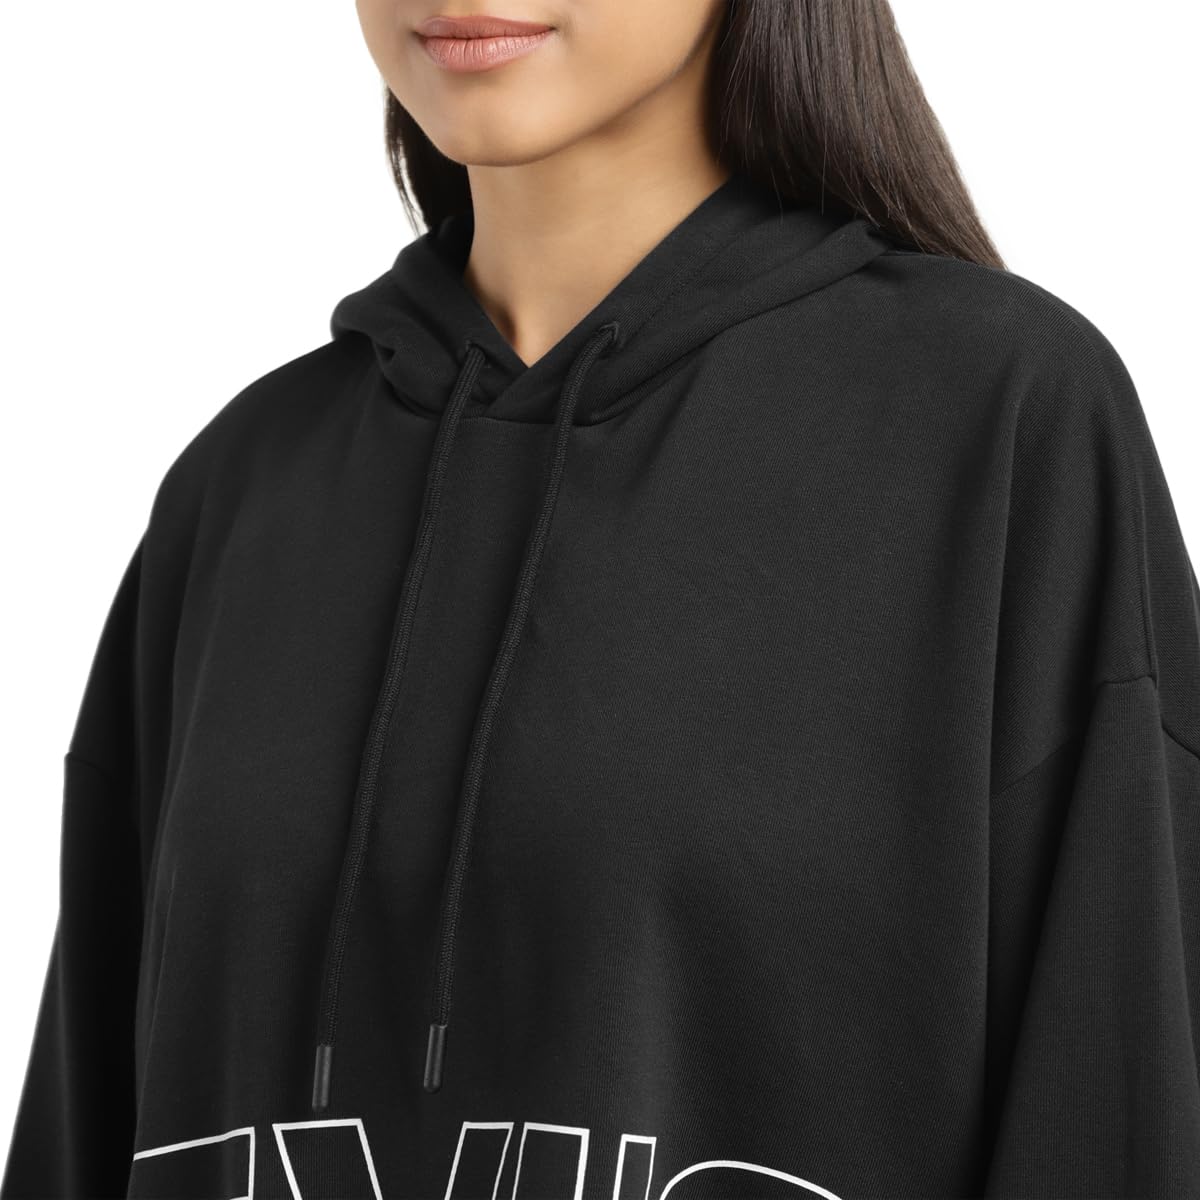 Levi's Women's Brand Logo Black and White Hooded Sweatshirt